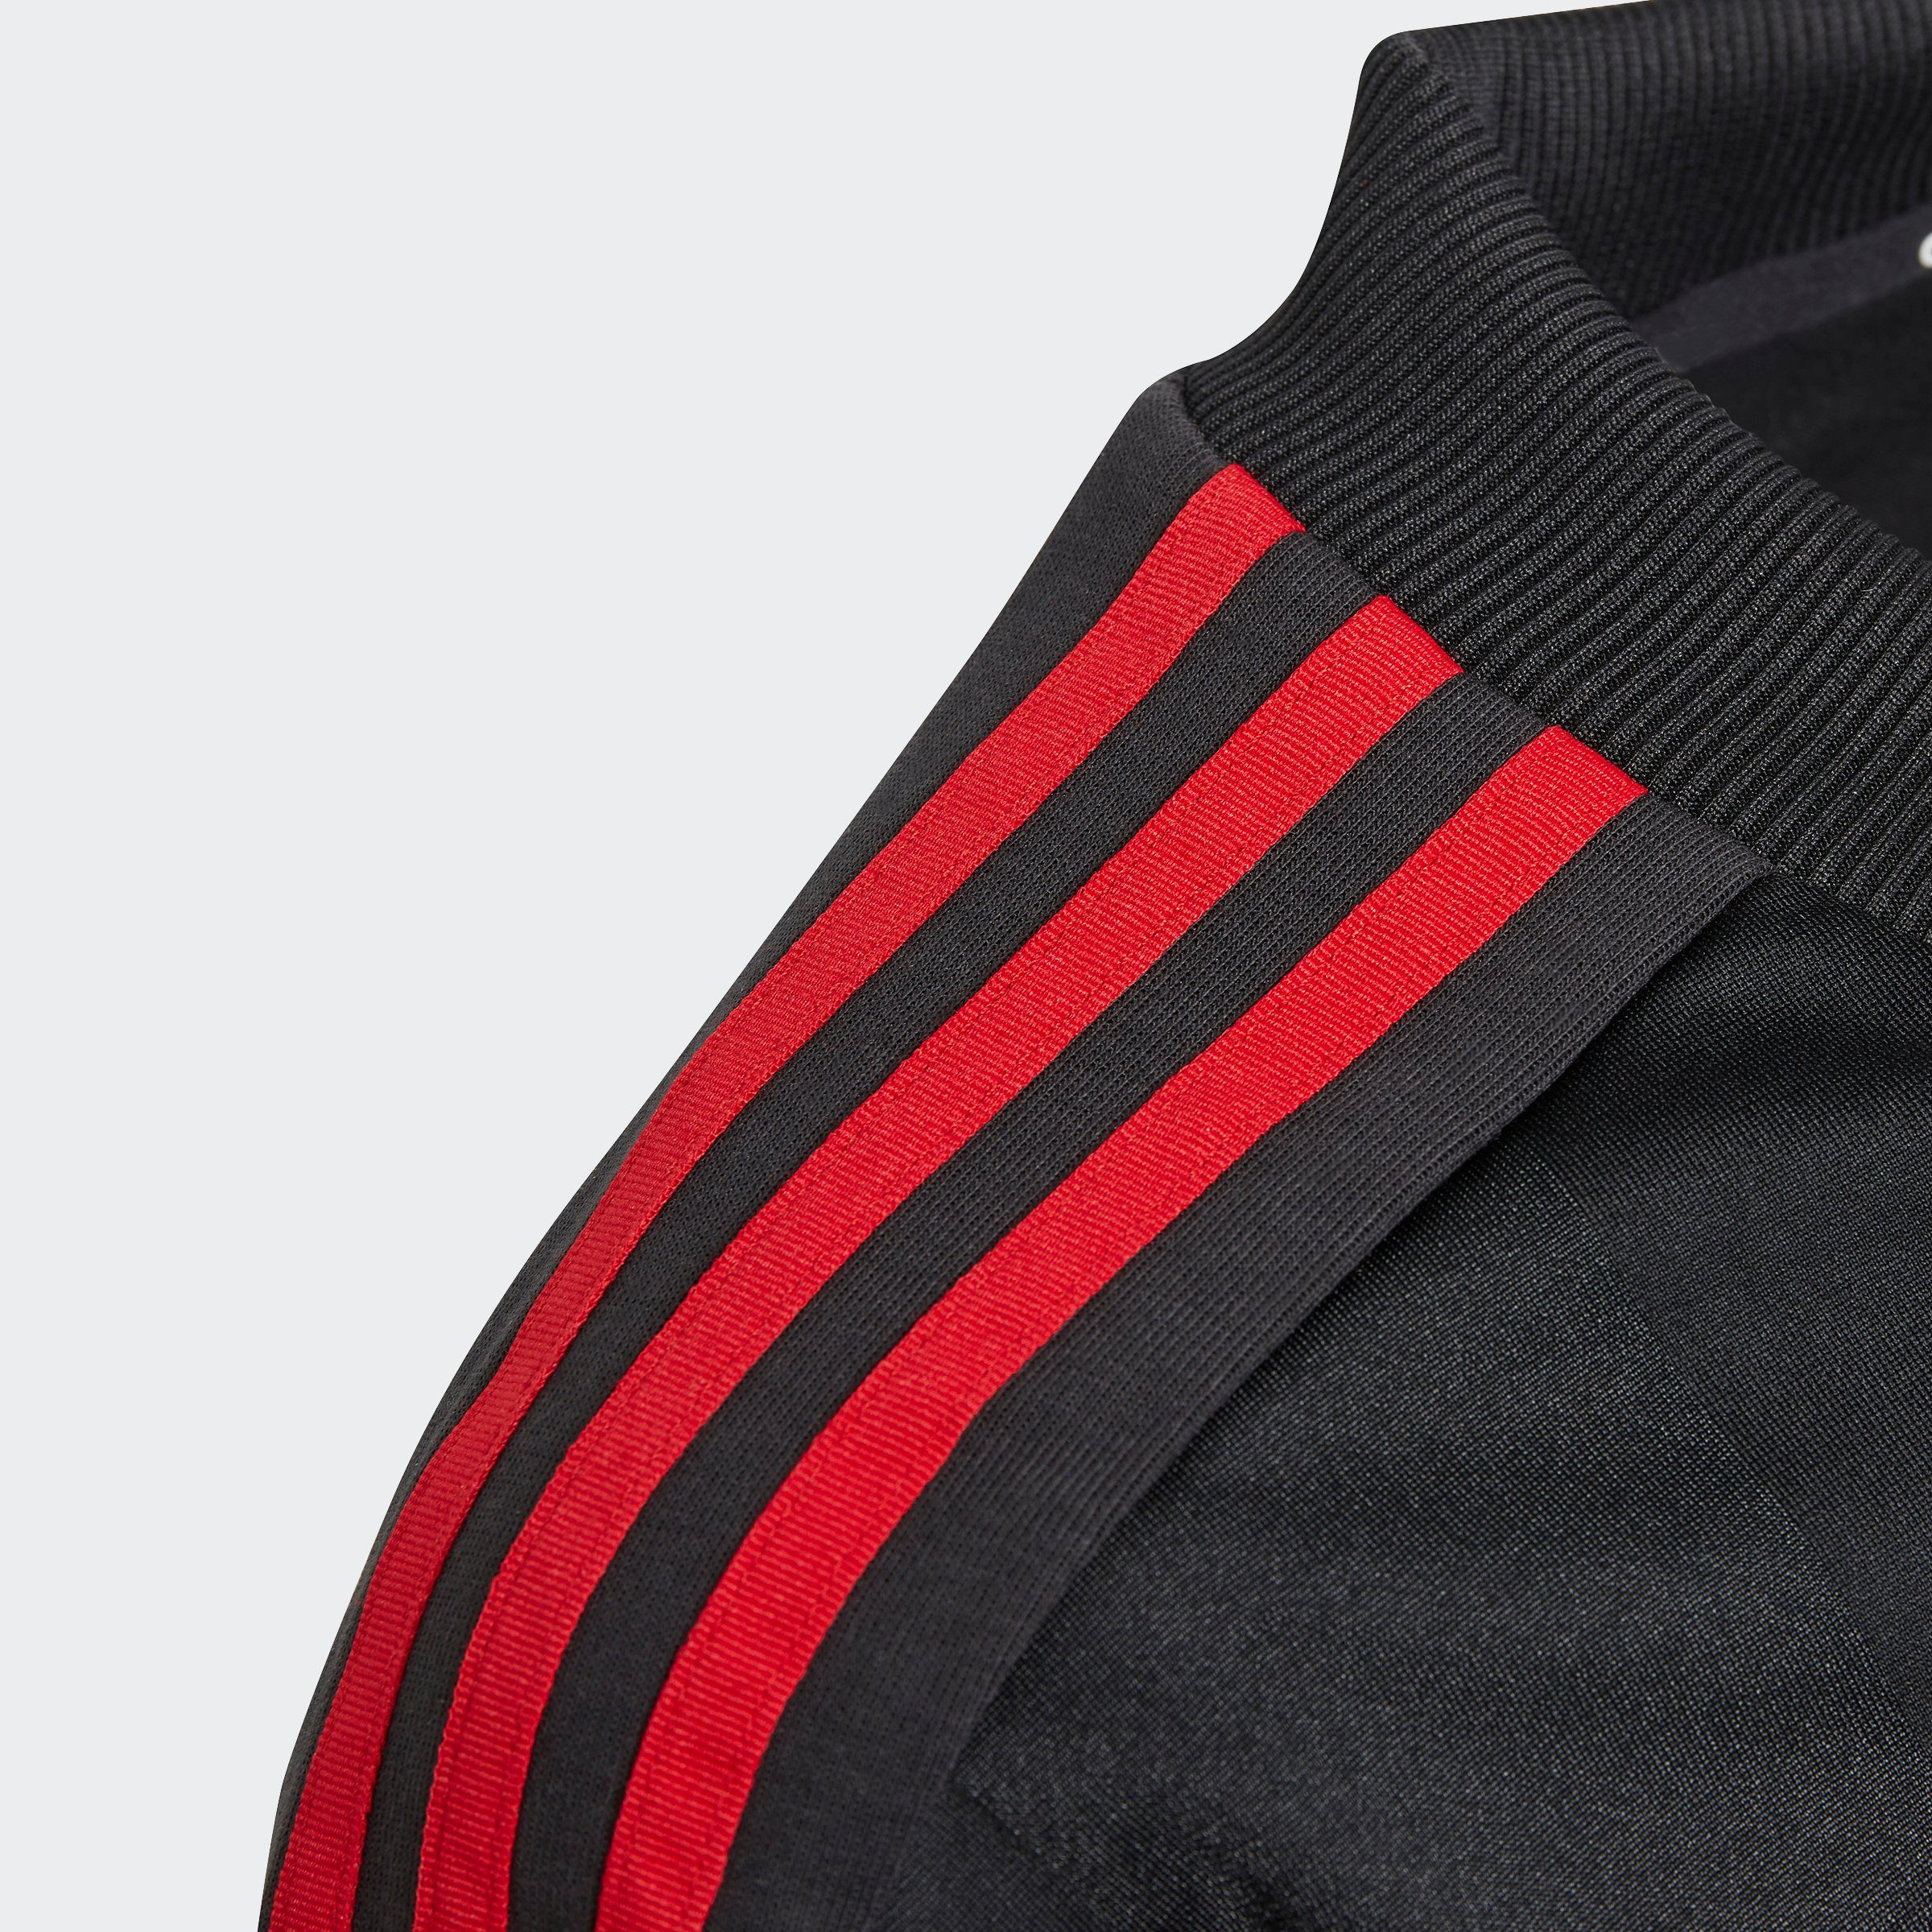 Black adidas / TIRO T-Shirt / Better Sportswear KIDS Scarlet Black